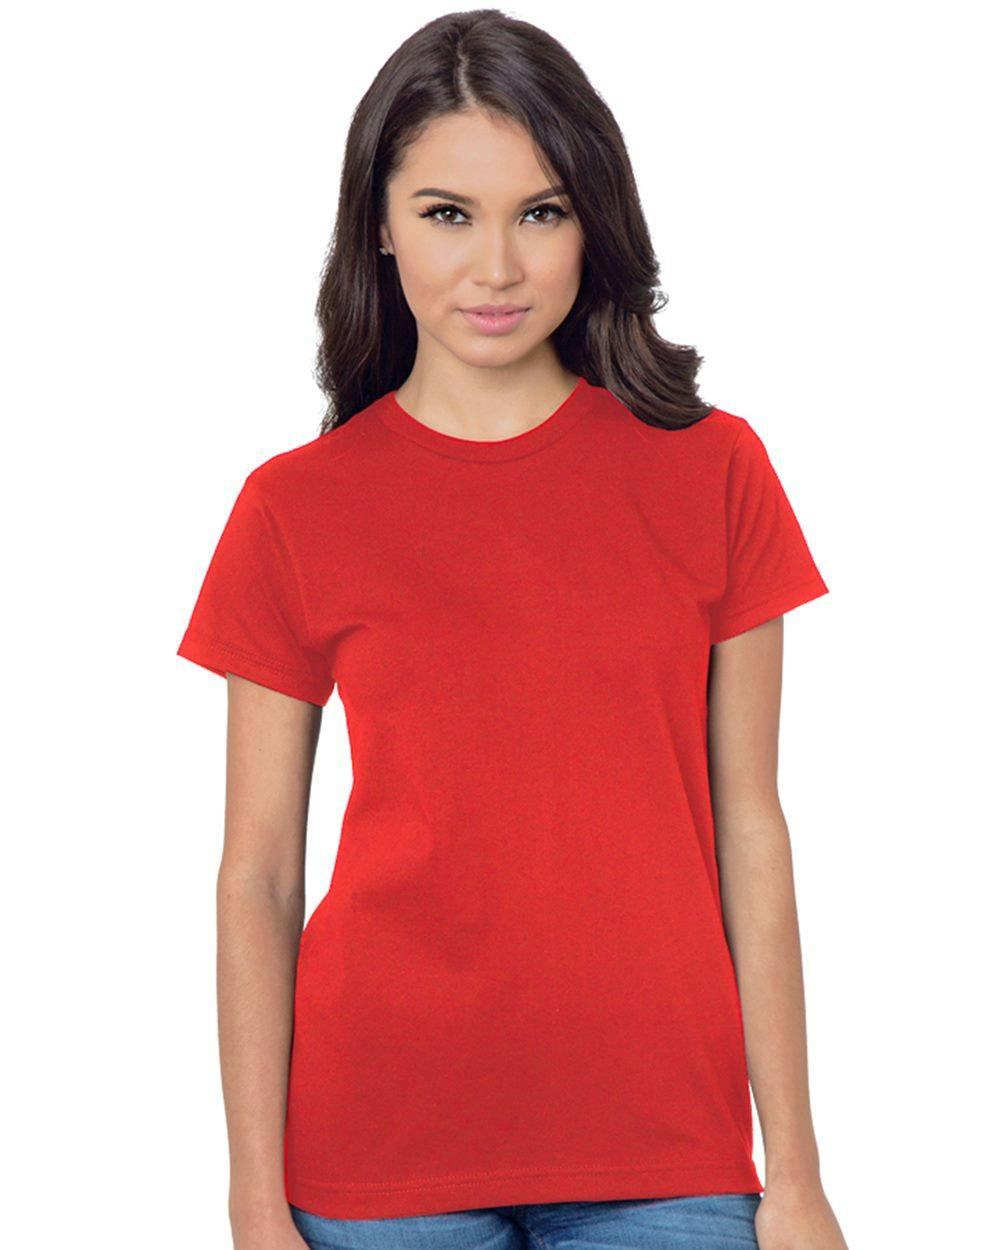 Image for Women's Union-Made Basic T-Shirt - 3075